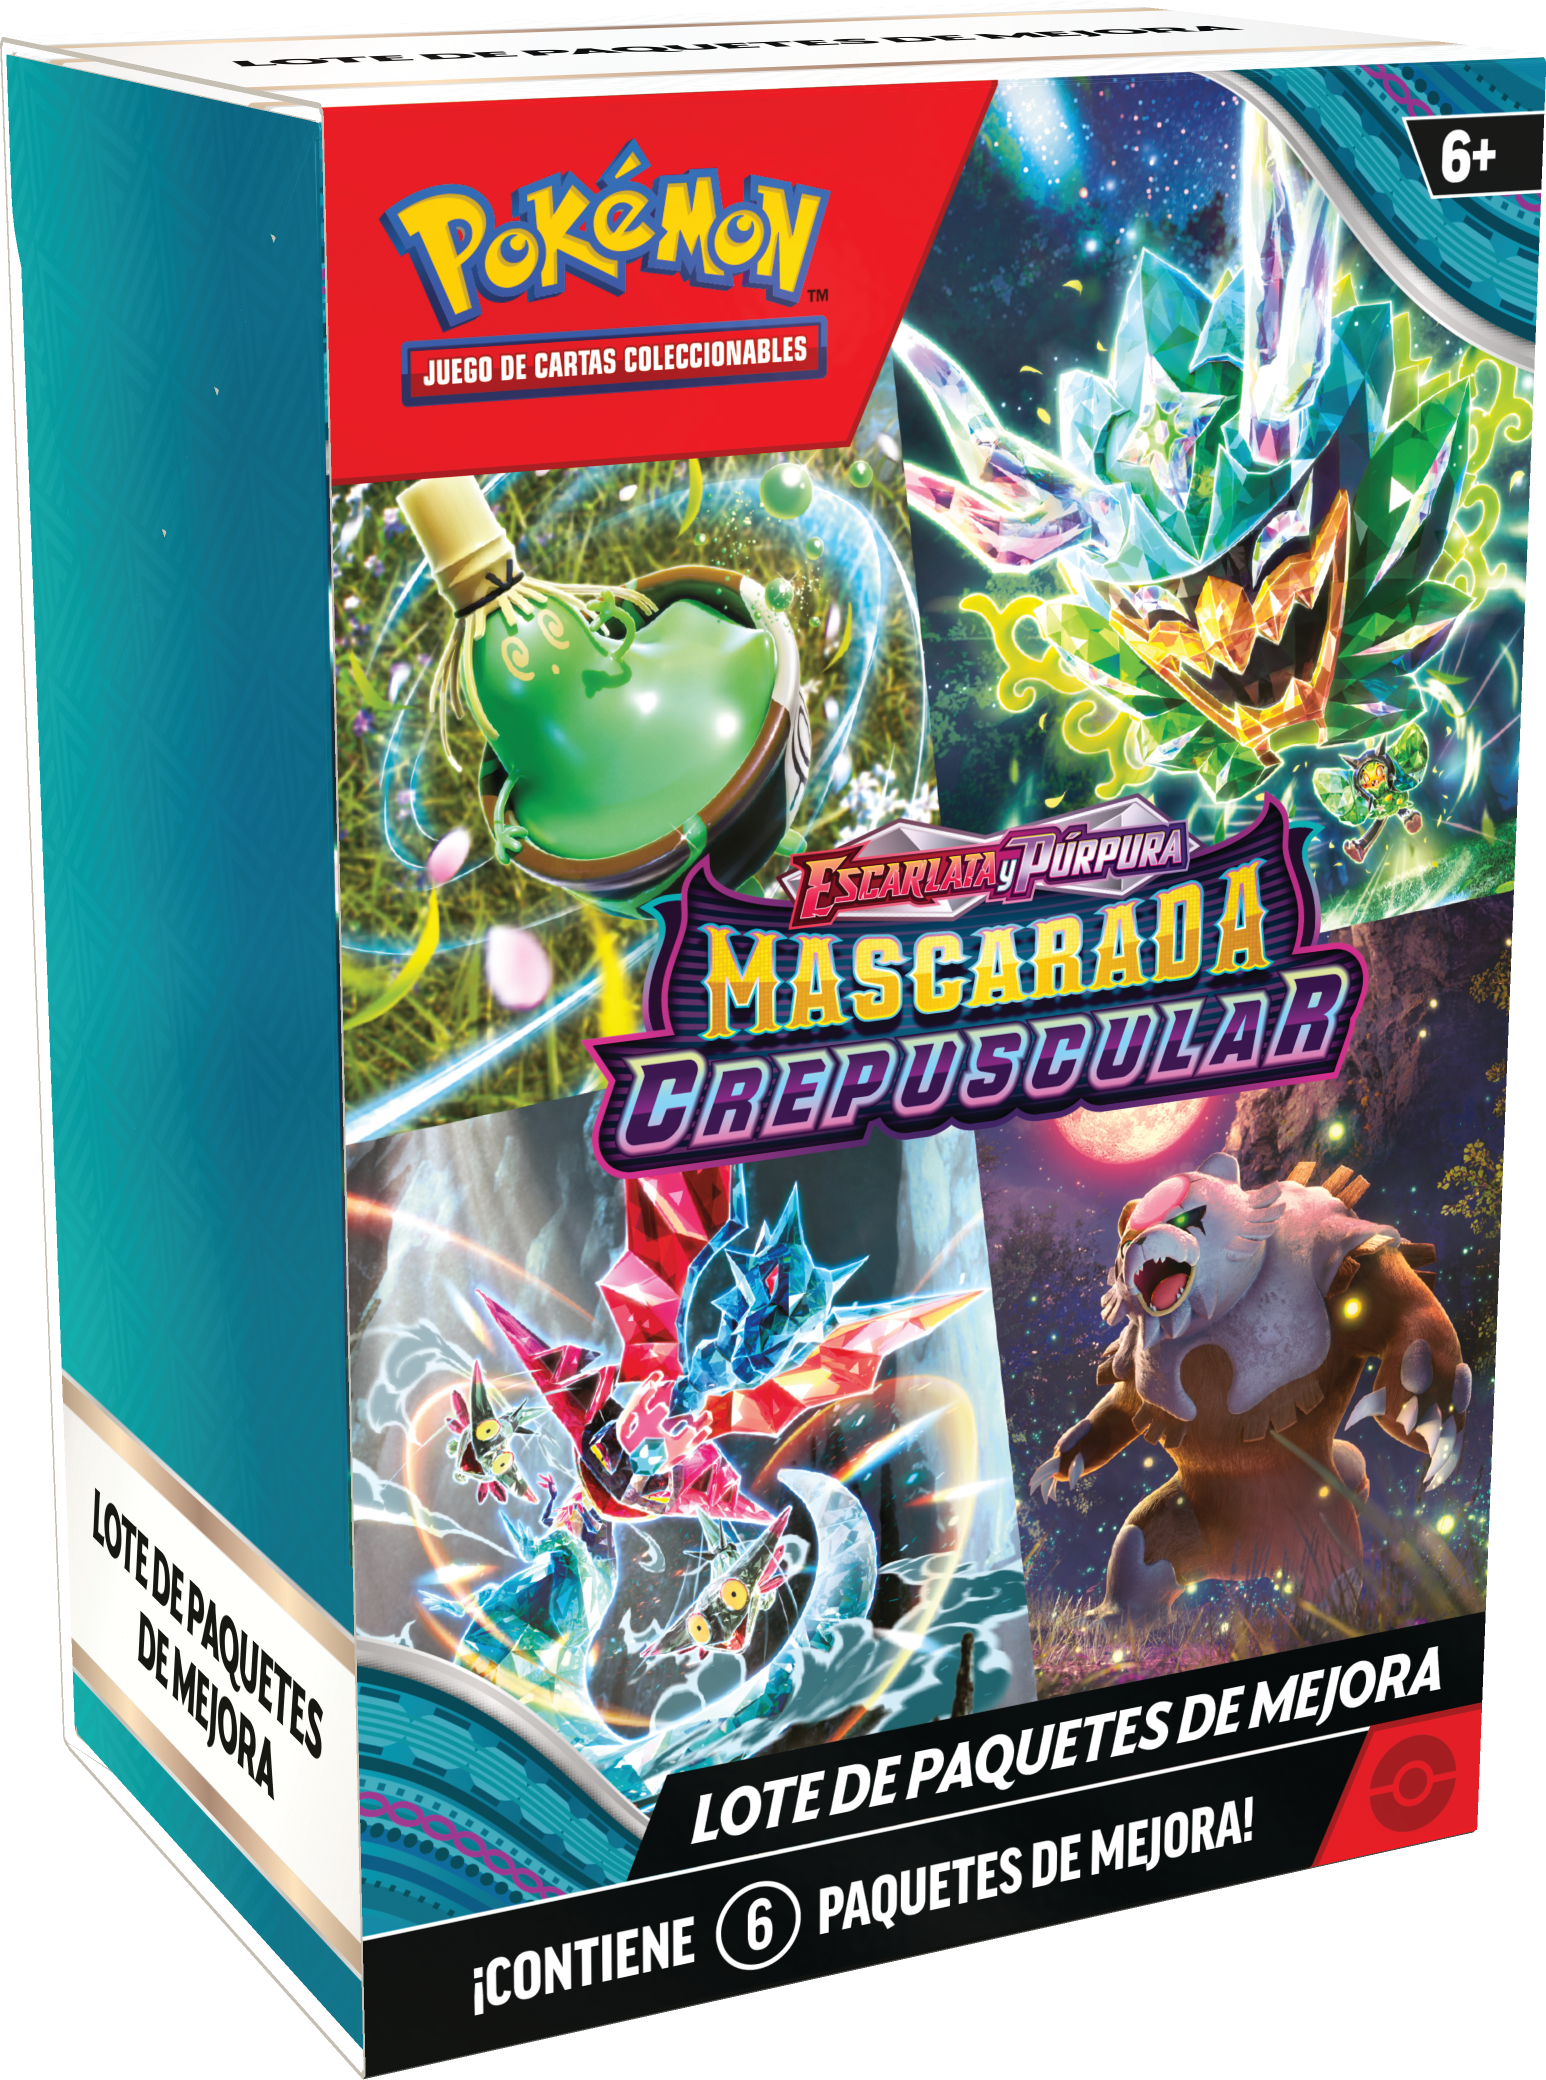 Pokemon TCG Escarlata y Purpura: Mascarada Crepuscular - Booster Bundle 6 Pack En EspaÃ±ol